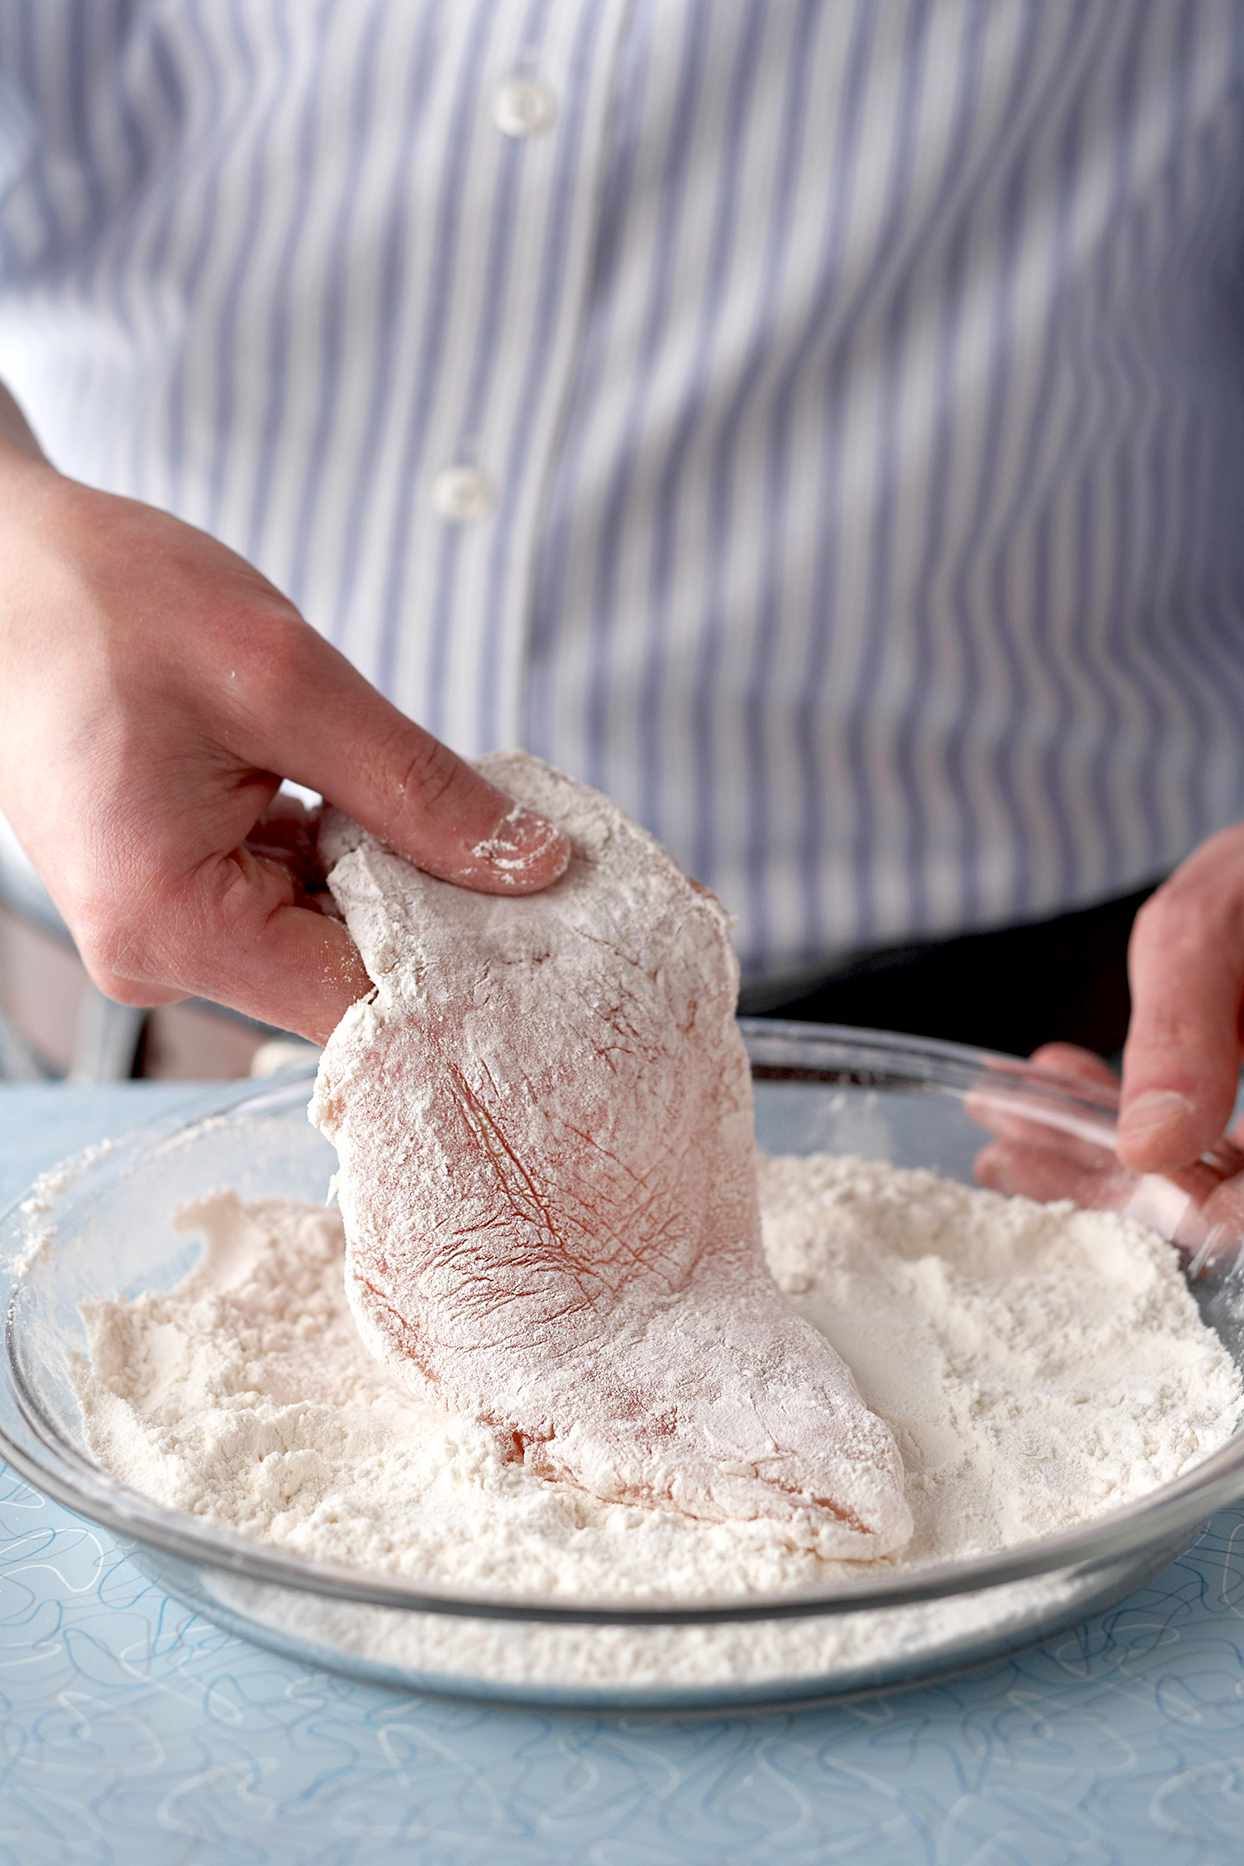 Coating chicken breast in flour